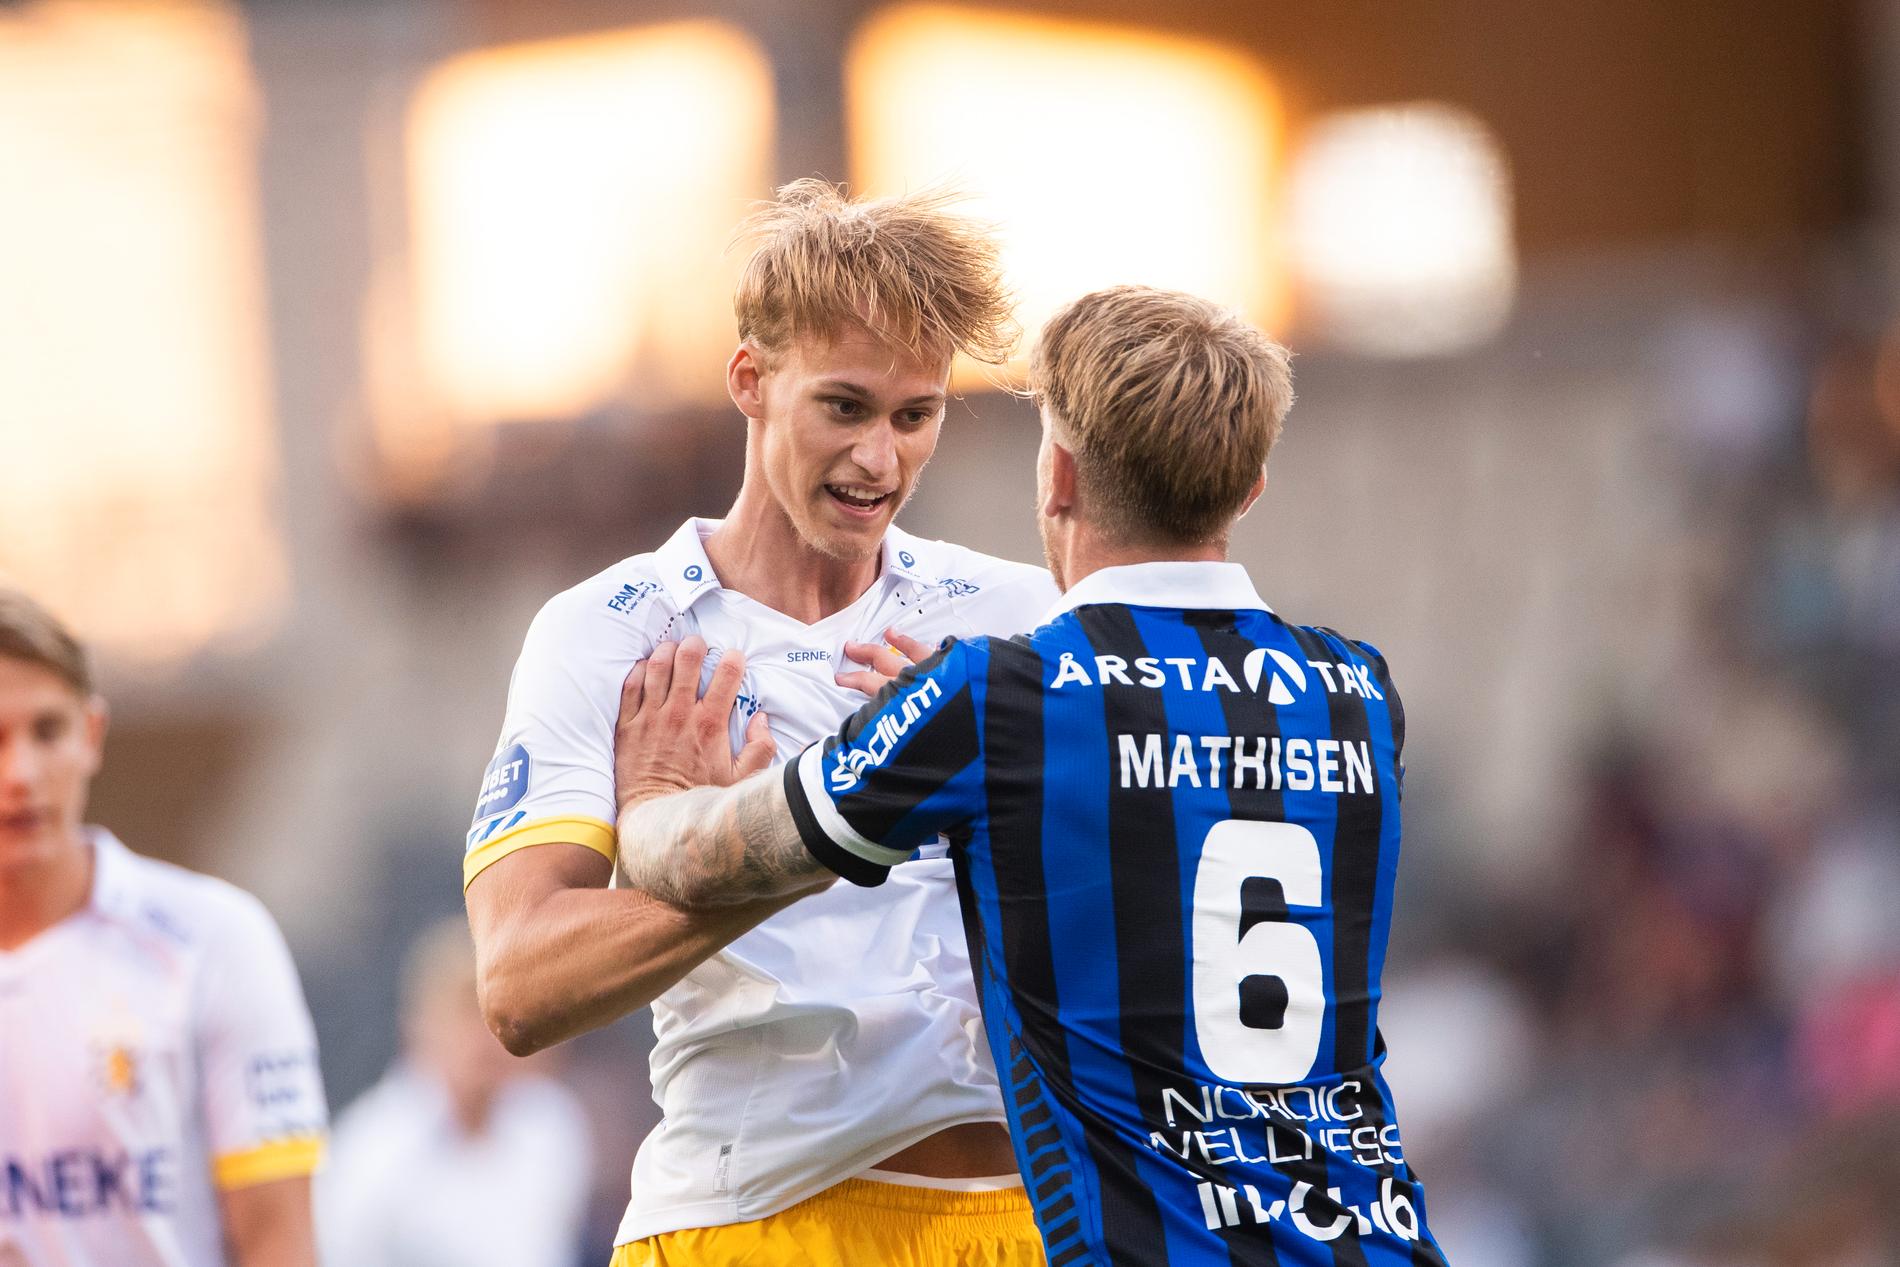 Oscar Vilhelmsson och Marcus Mathisen hamnade i bråk i matchens slutskede. 